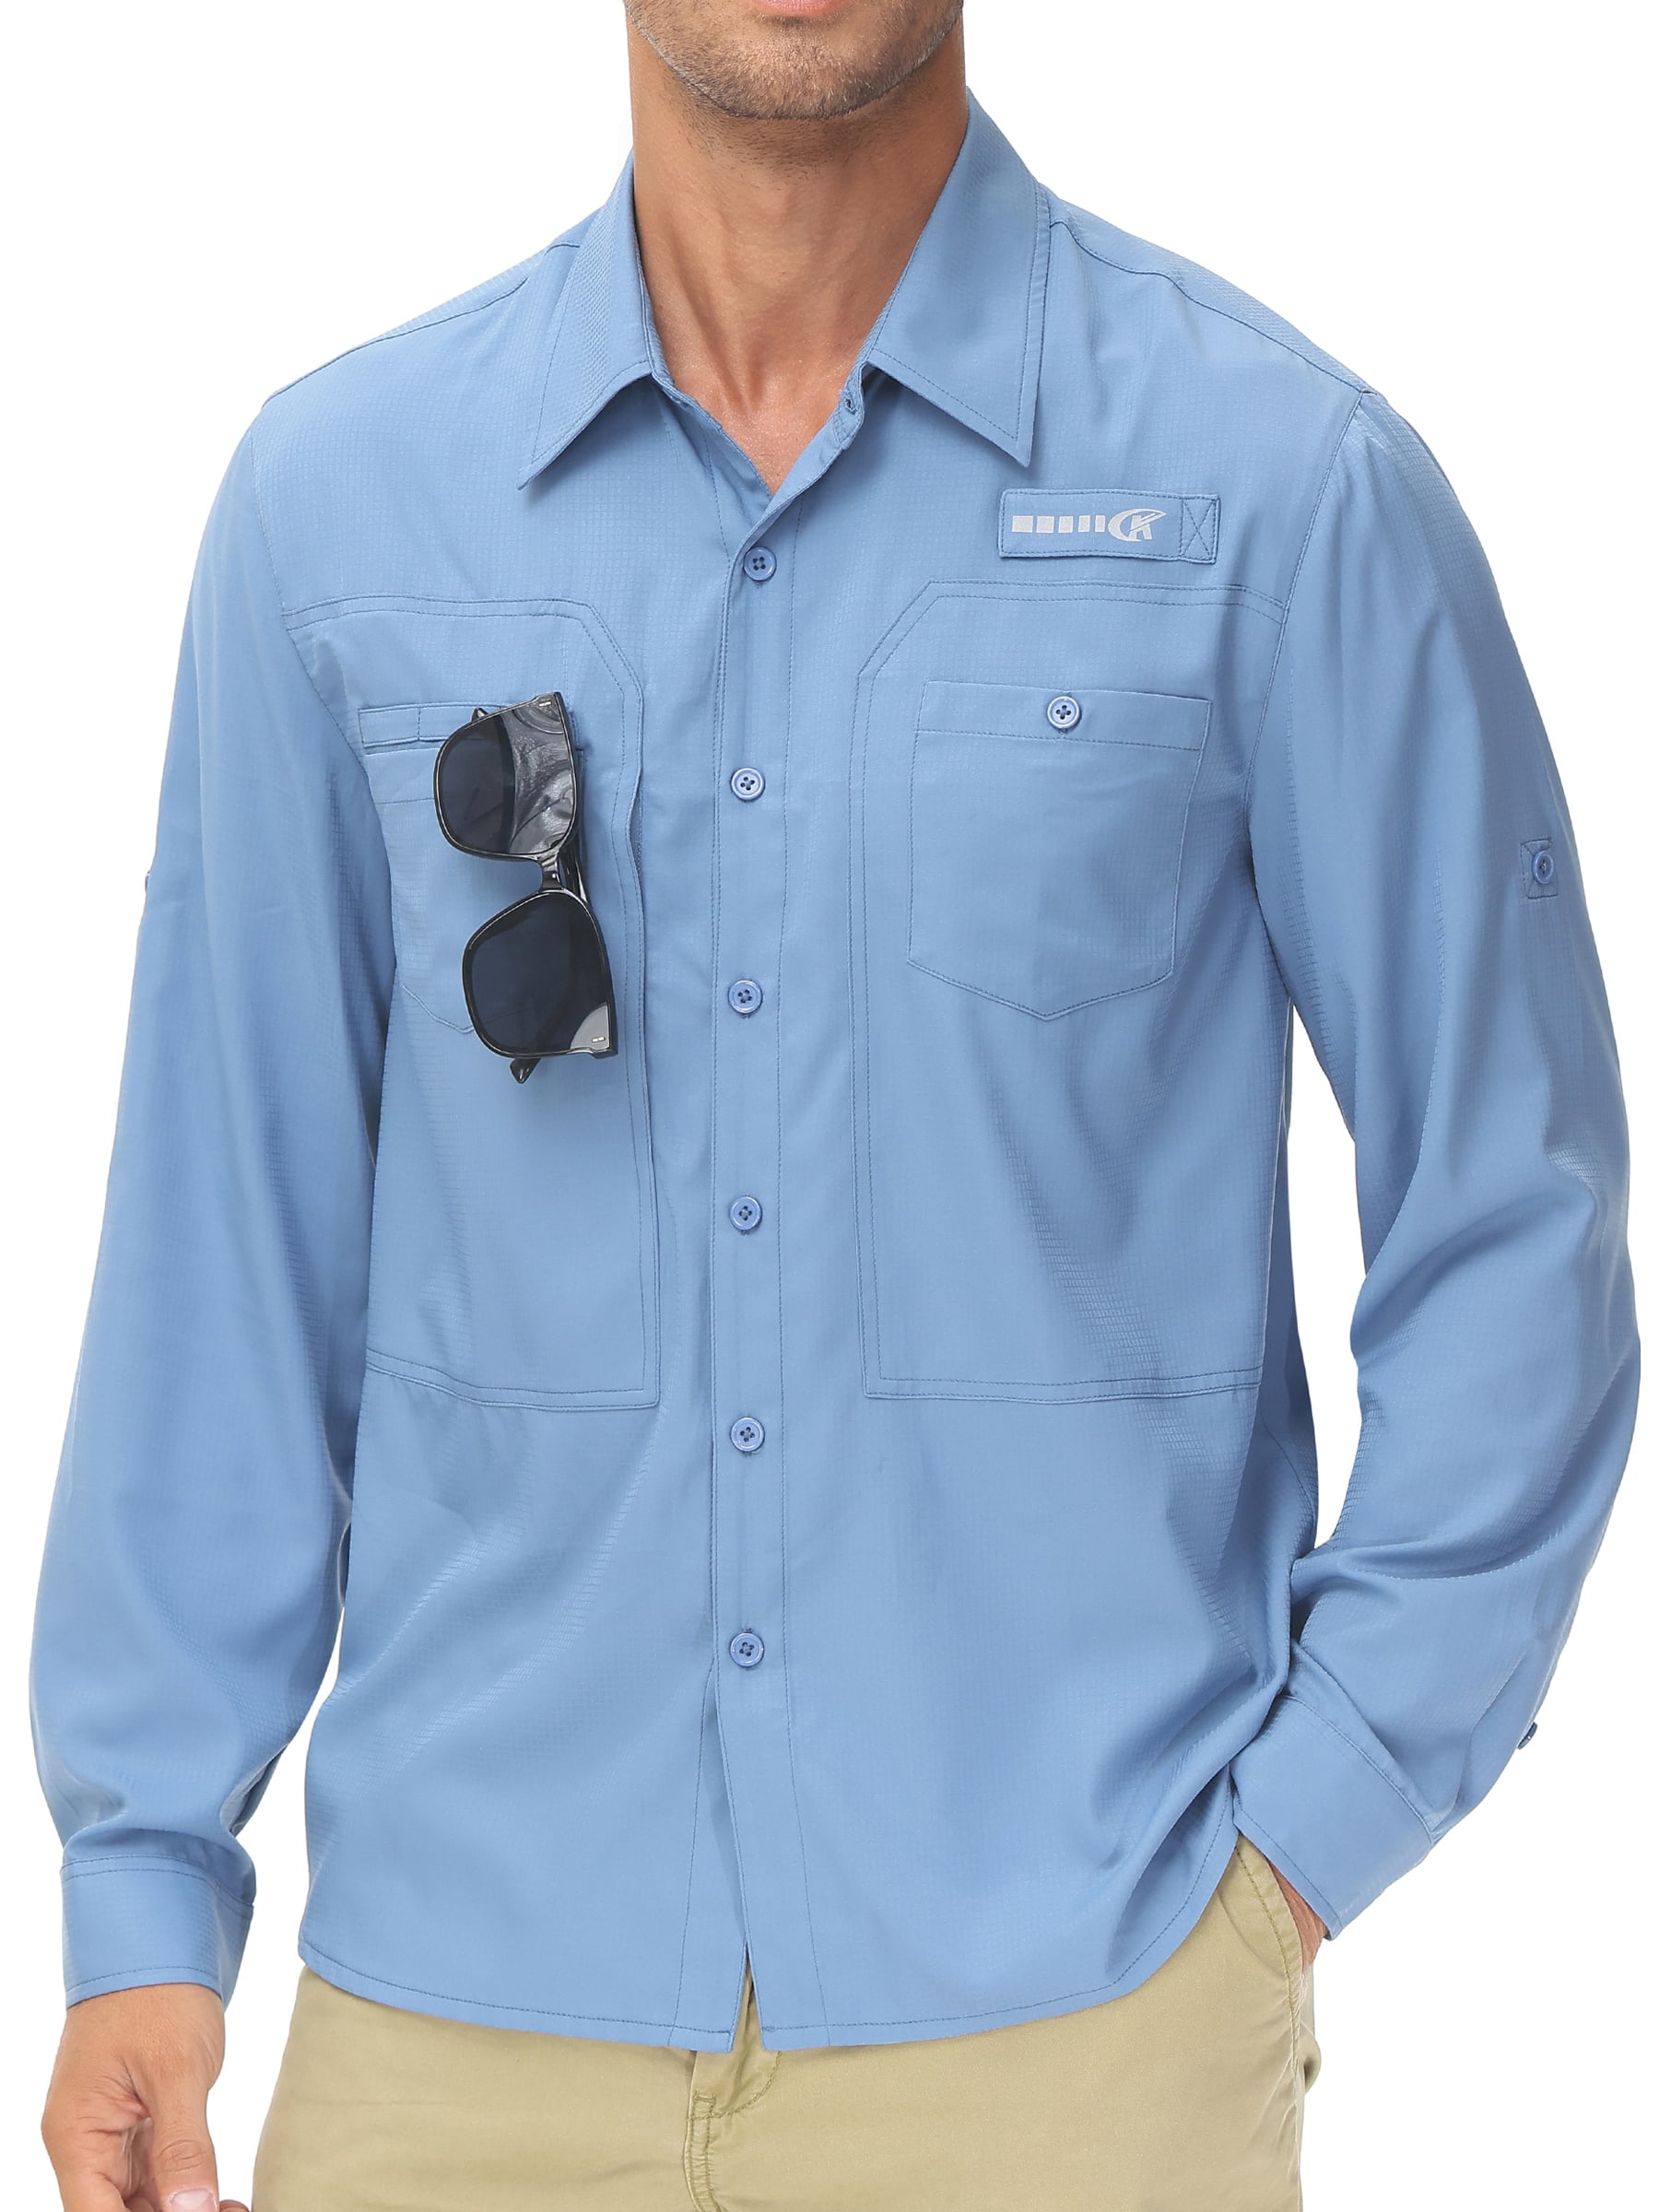 Pdbokew Men's Sun Protection Fishing Shirts Long Sleeve Travel Work Shirts  for Men UPF50+ Button Down Shirts with Zipper Pockets Mist Blue M